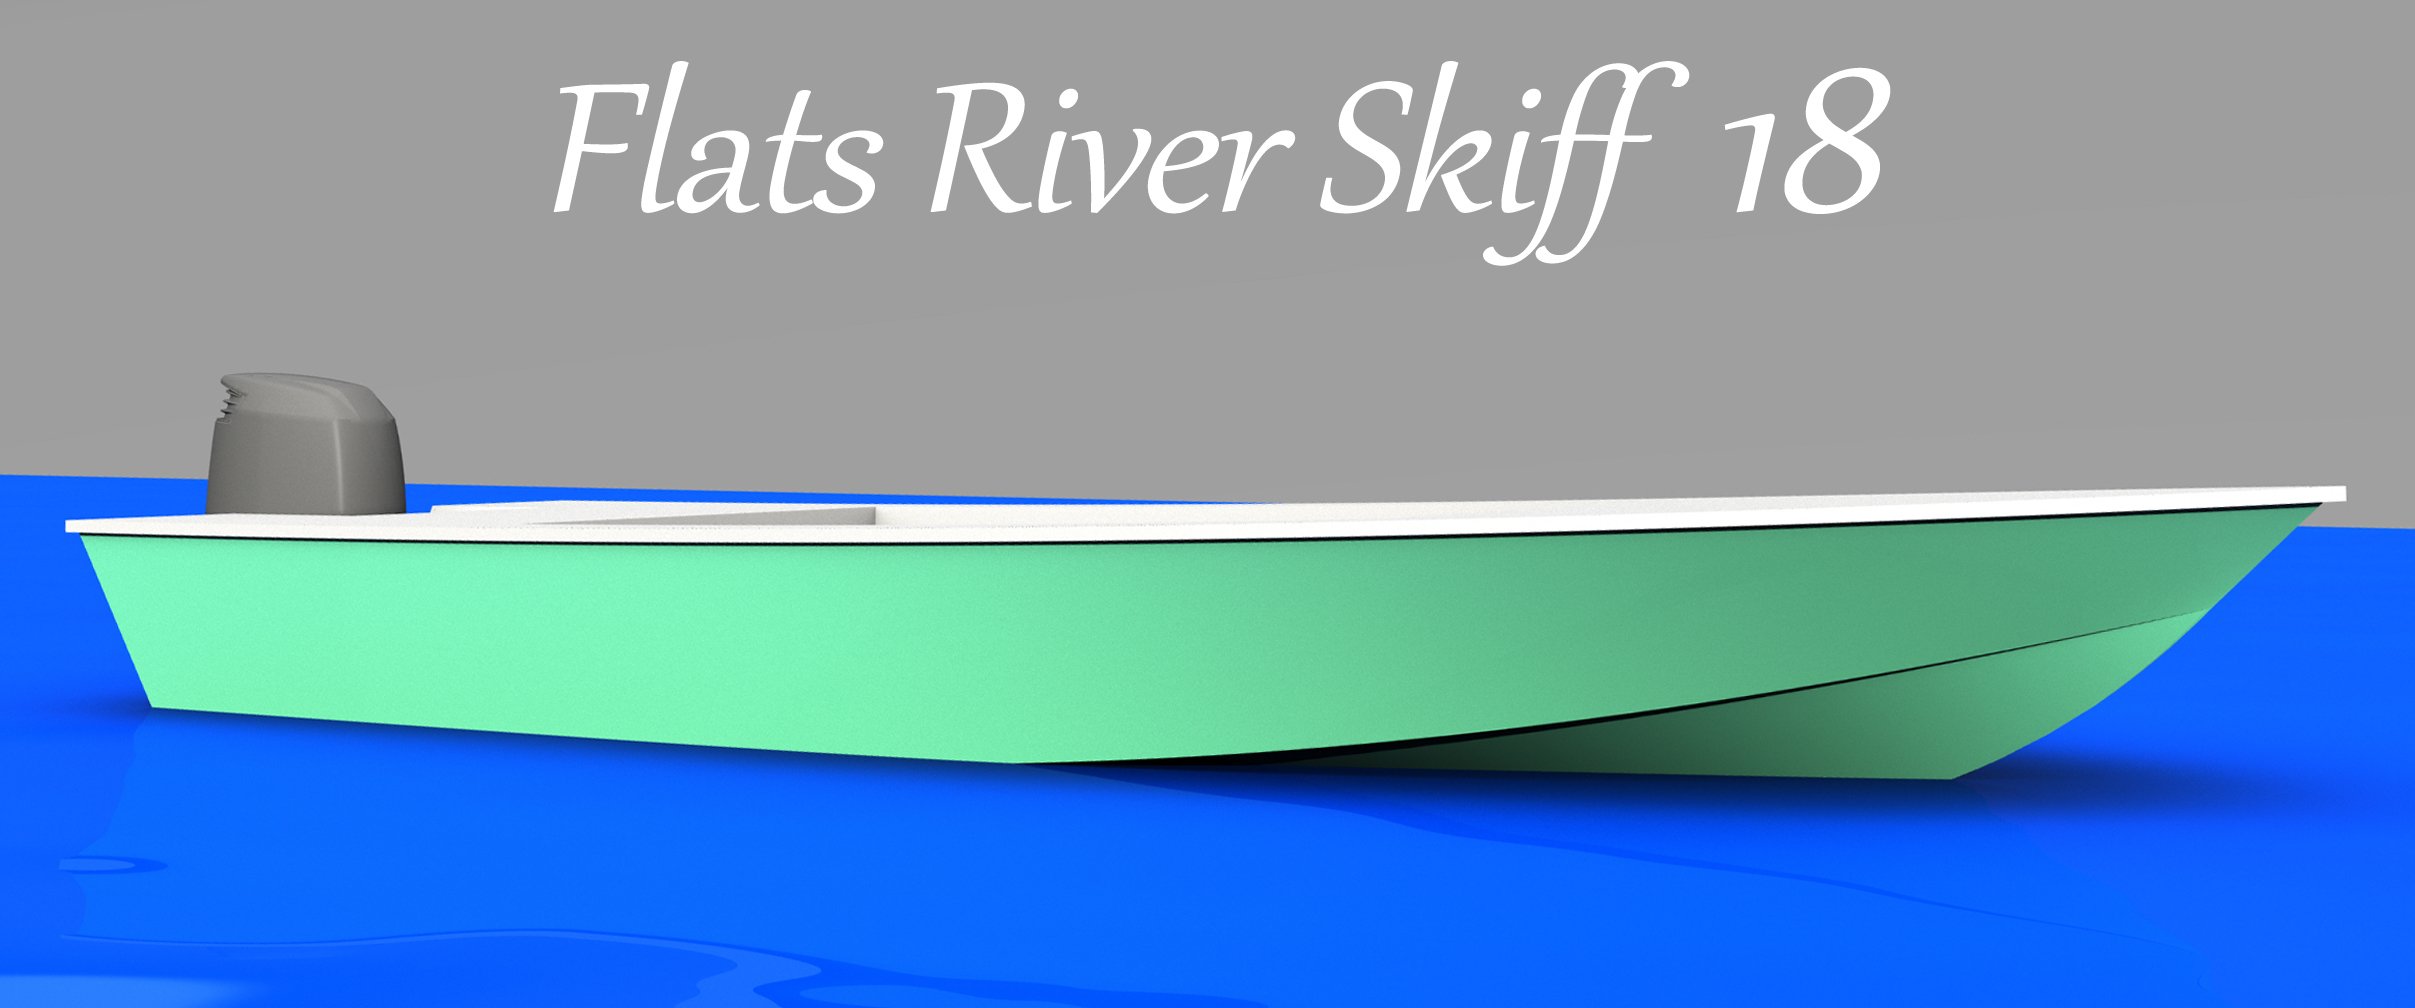 Bay Boat Plans - Flats Boat Plans -Flats River Skiff 18